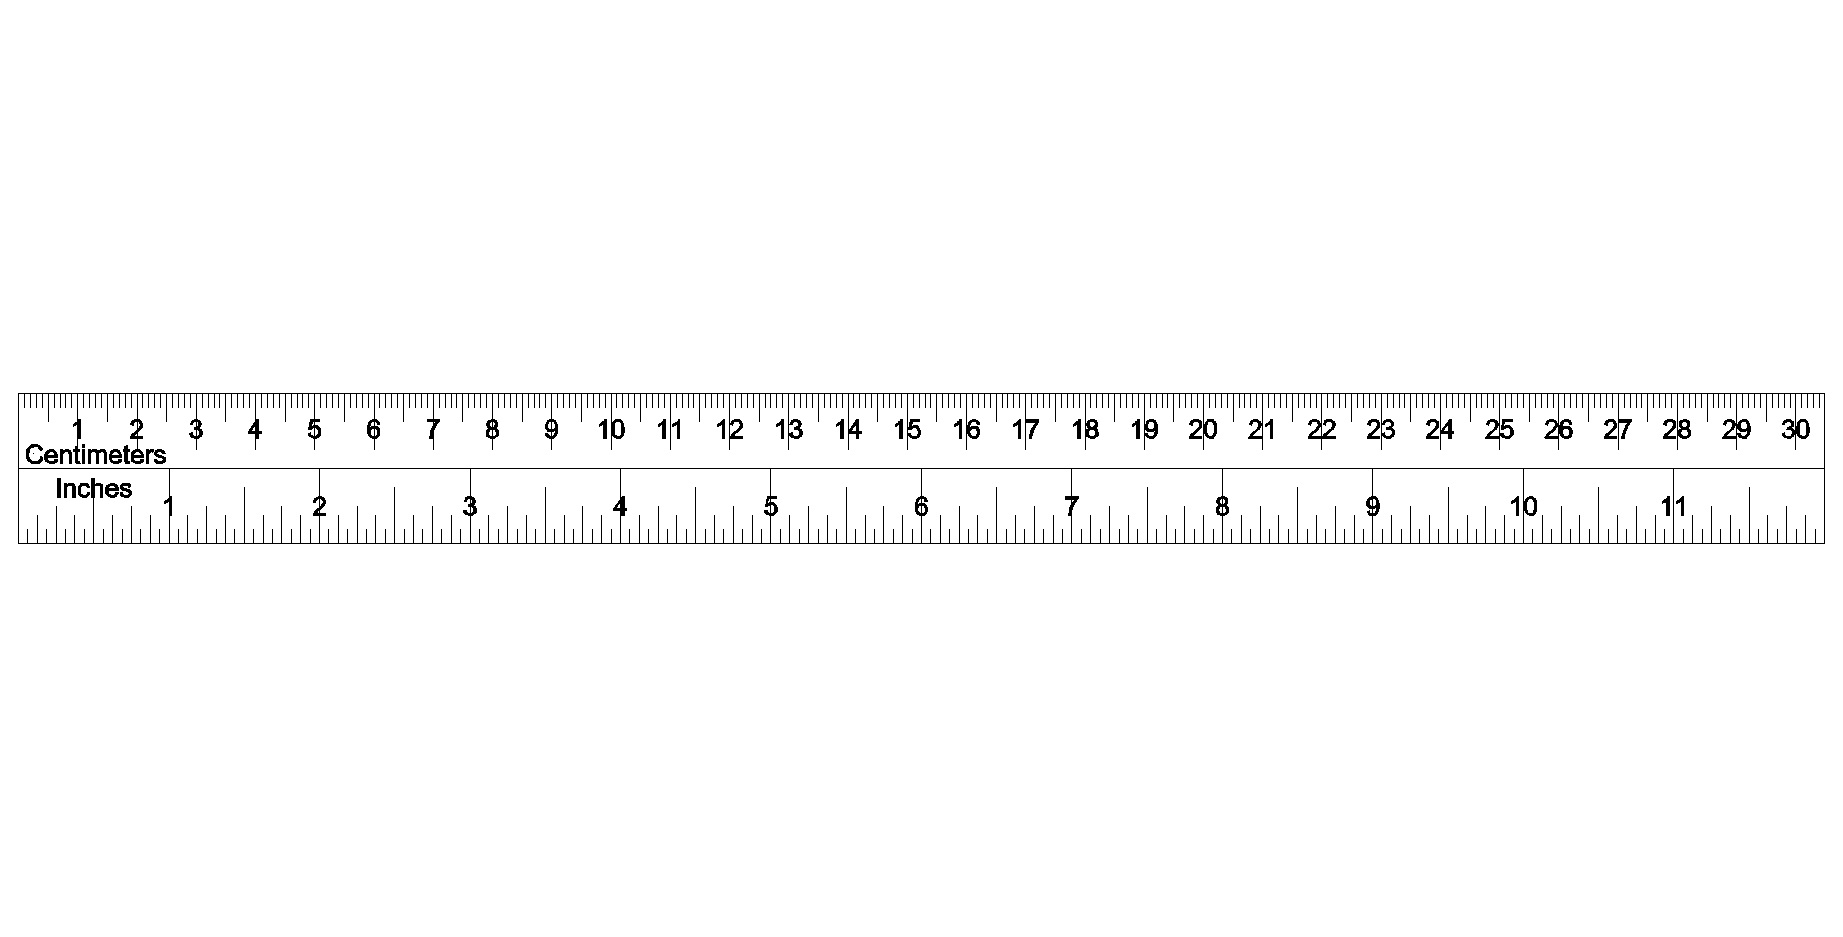 life size cm ruler